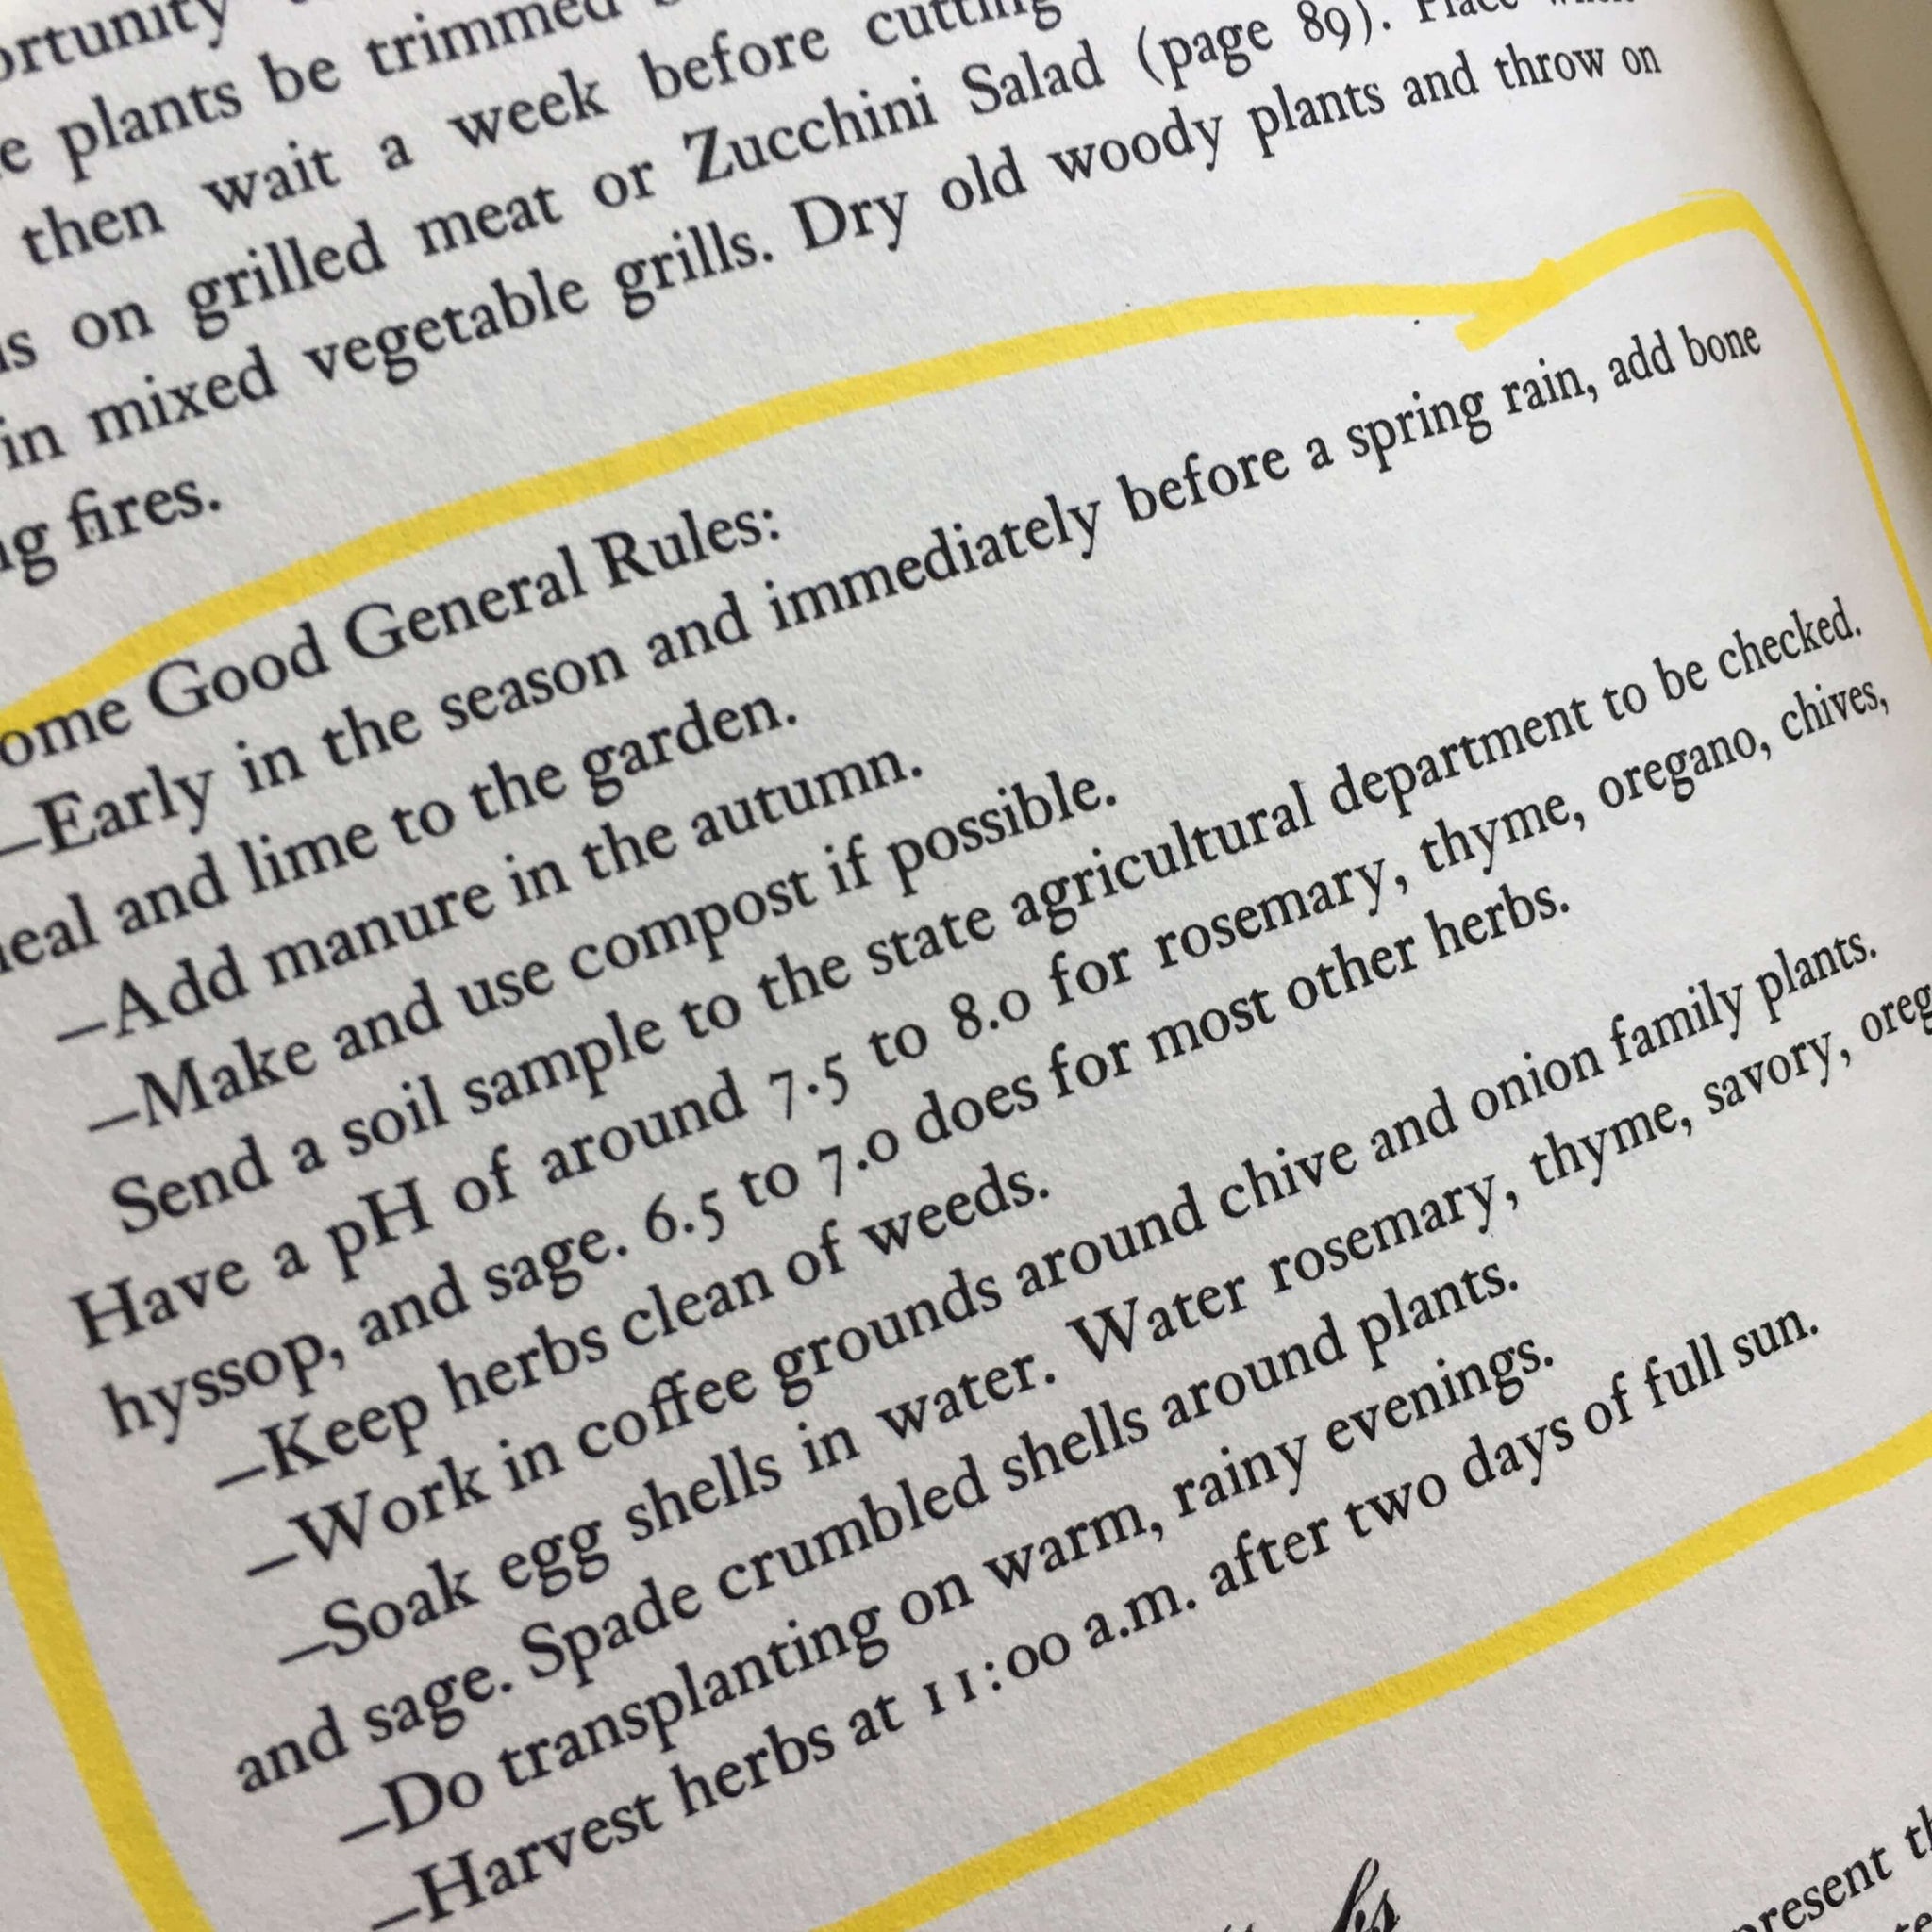 Summer Food by Judith Olney - 1978 First Edition Seasonal Cookbook